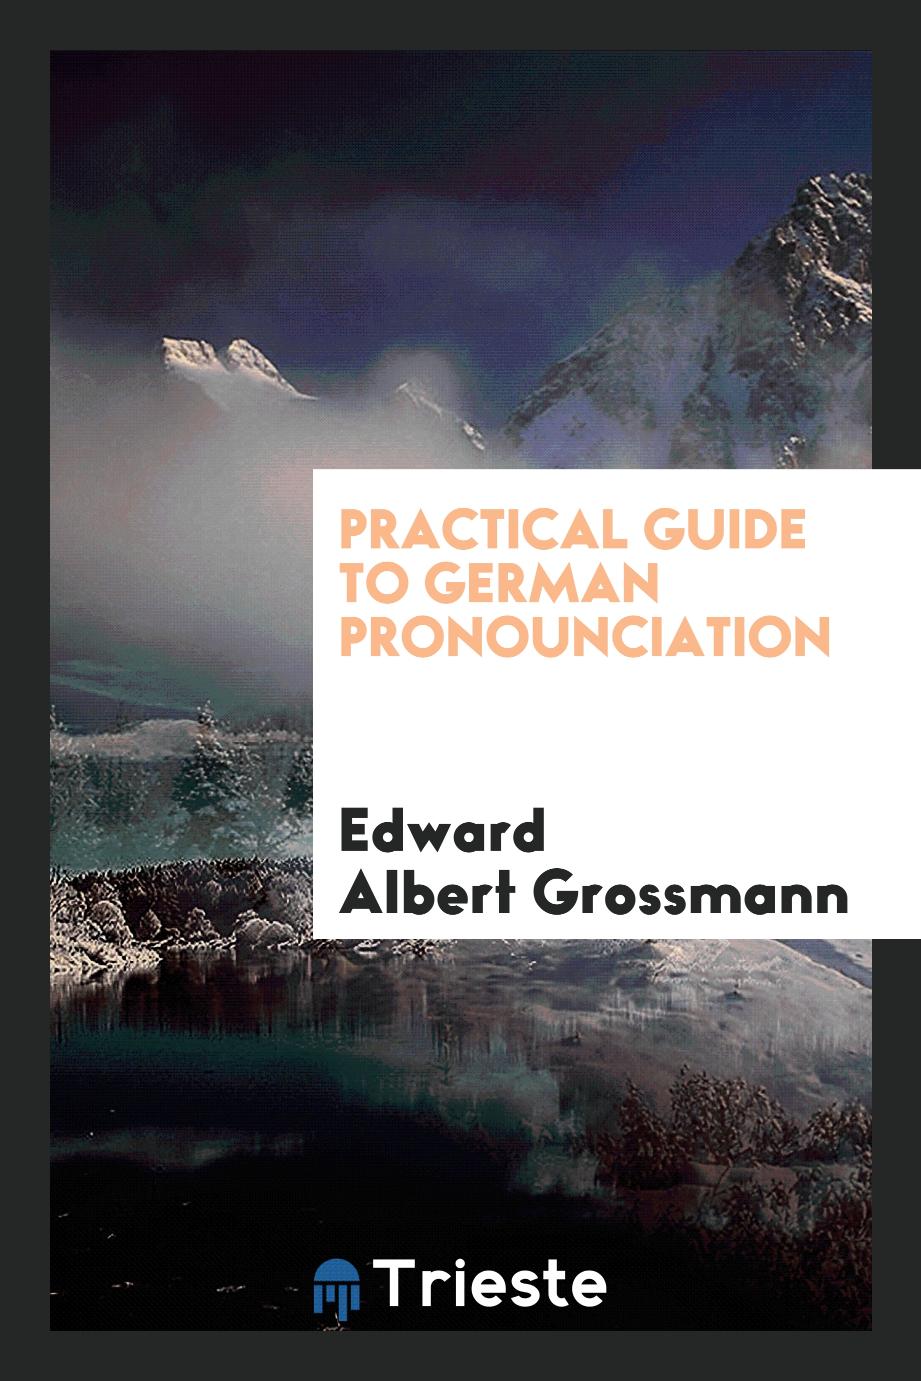 Practical guide to German pronounciation